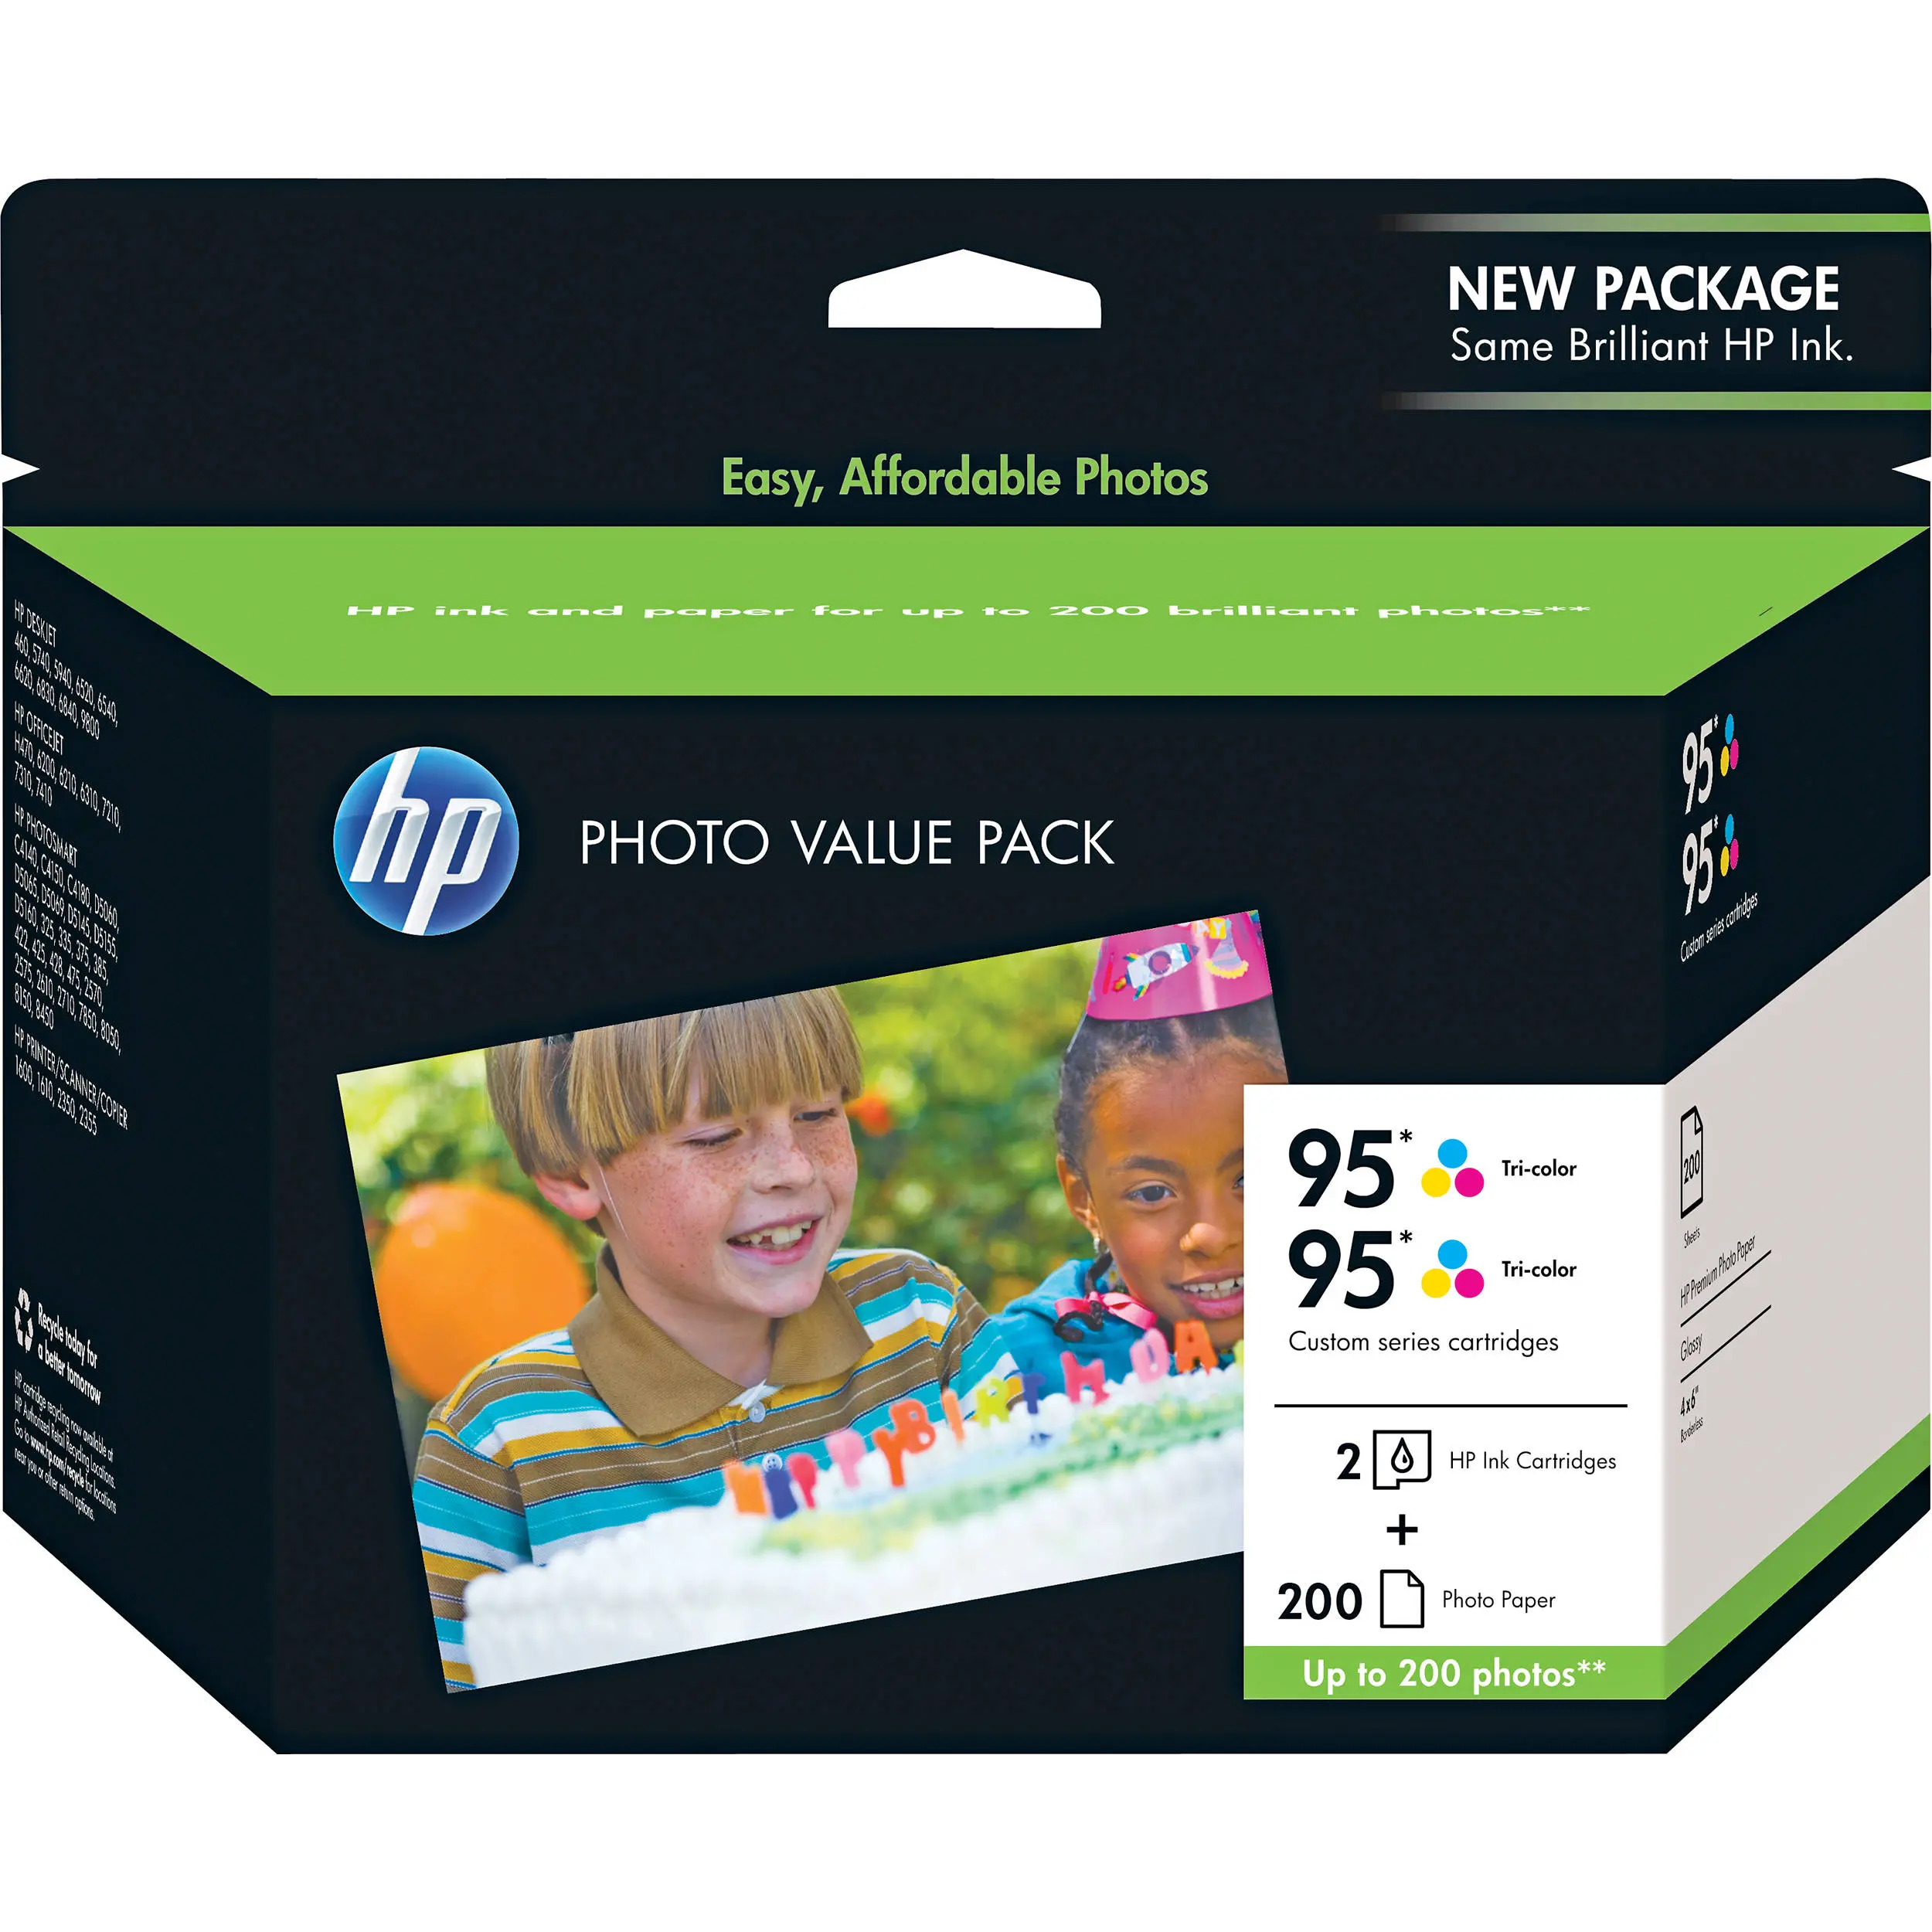 hewlett packard custom ink cartridges - Can I purchase setup cartridges for HP printer